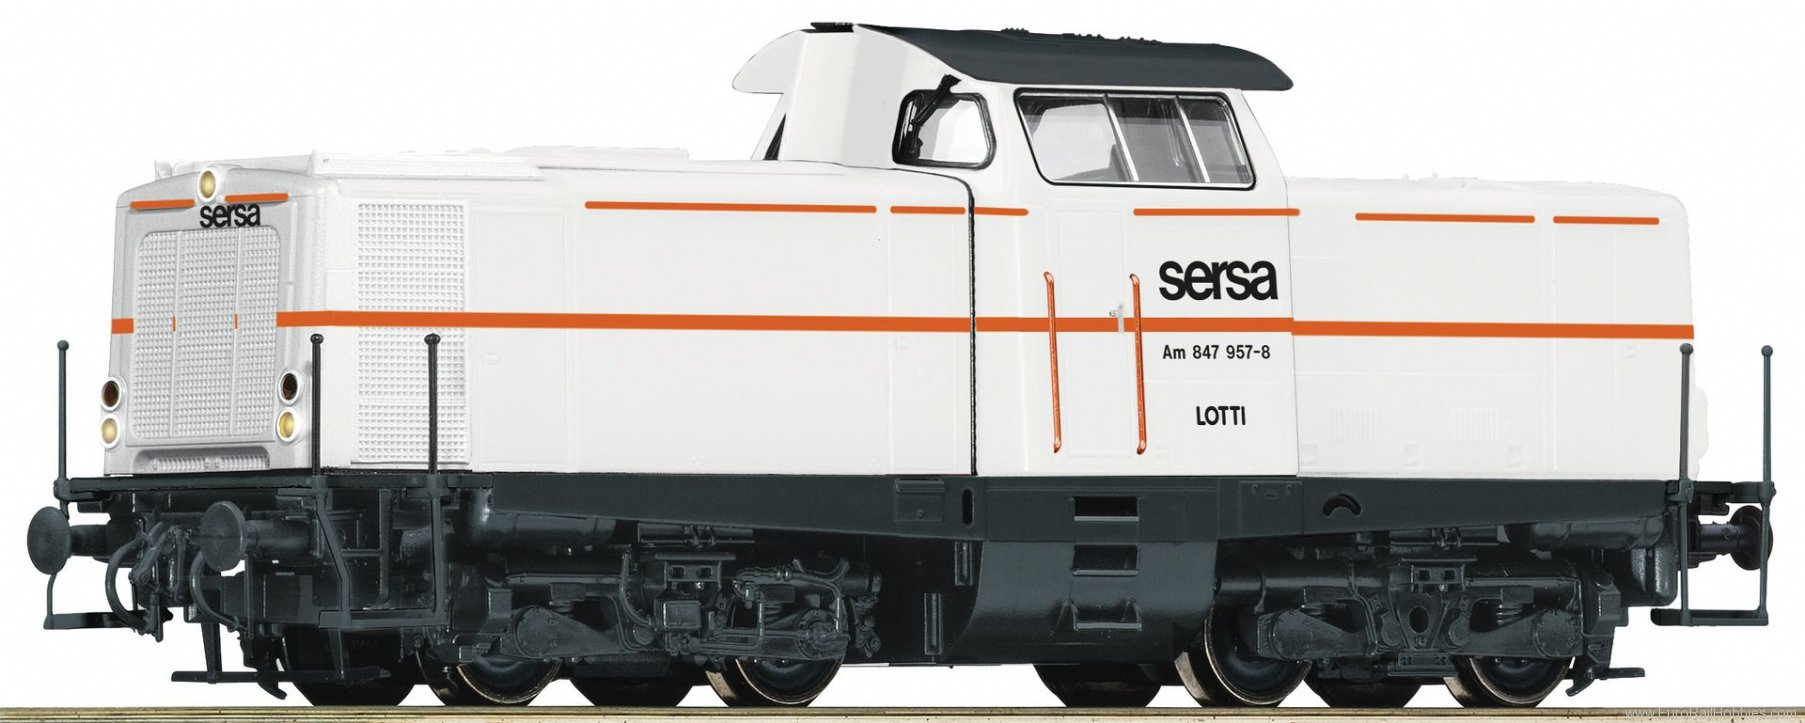 Roco 52566 SERSA Diesel locomotive Am 847 957-8, DCC w/S